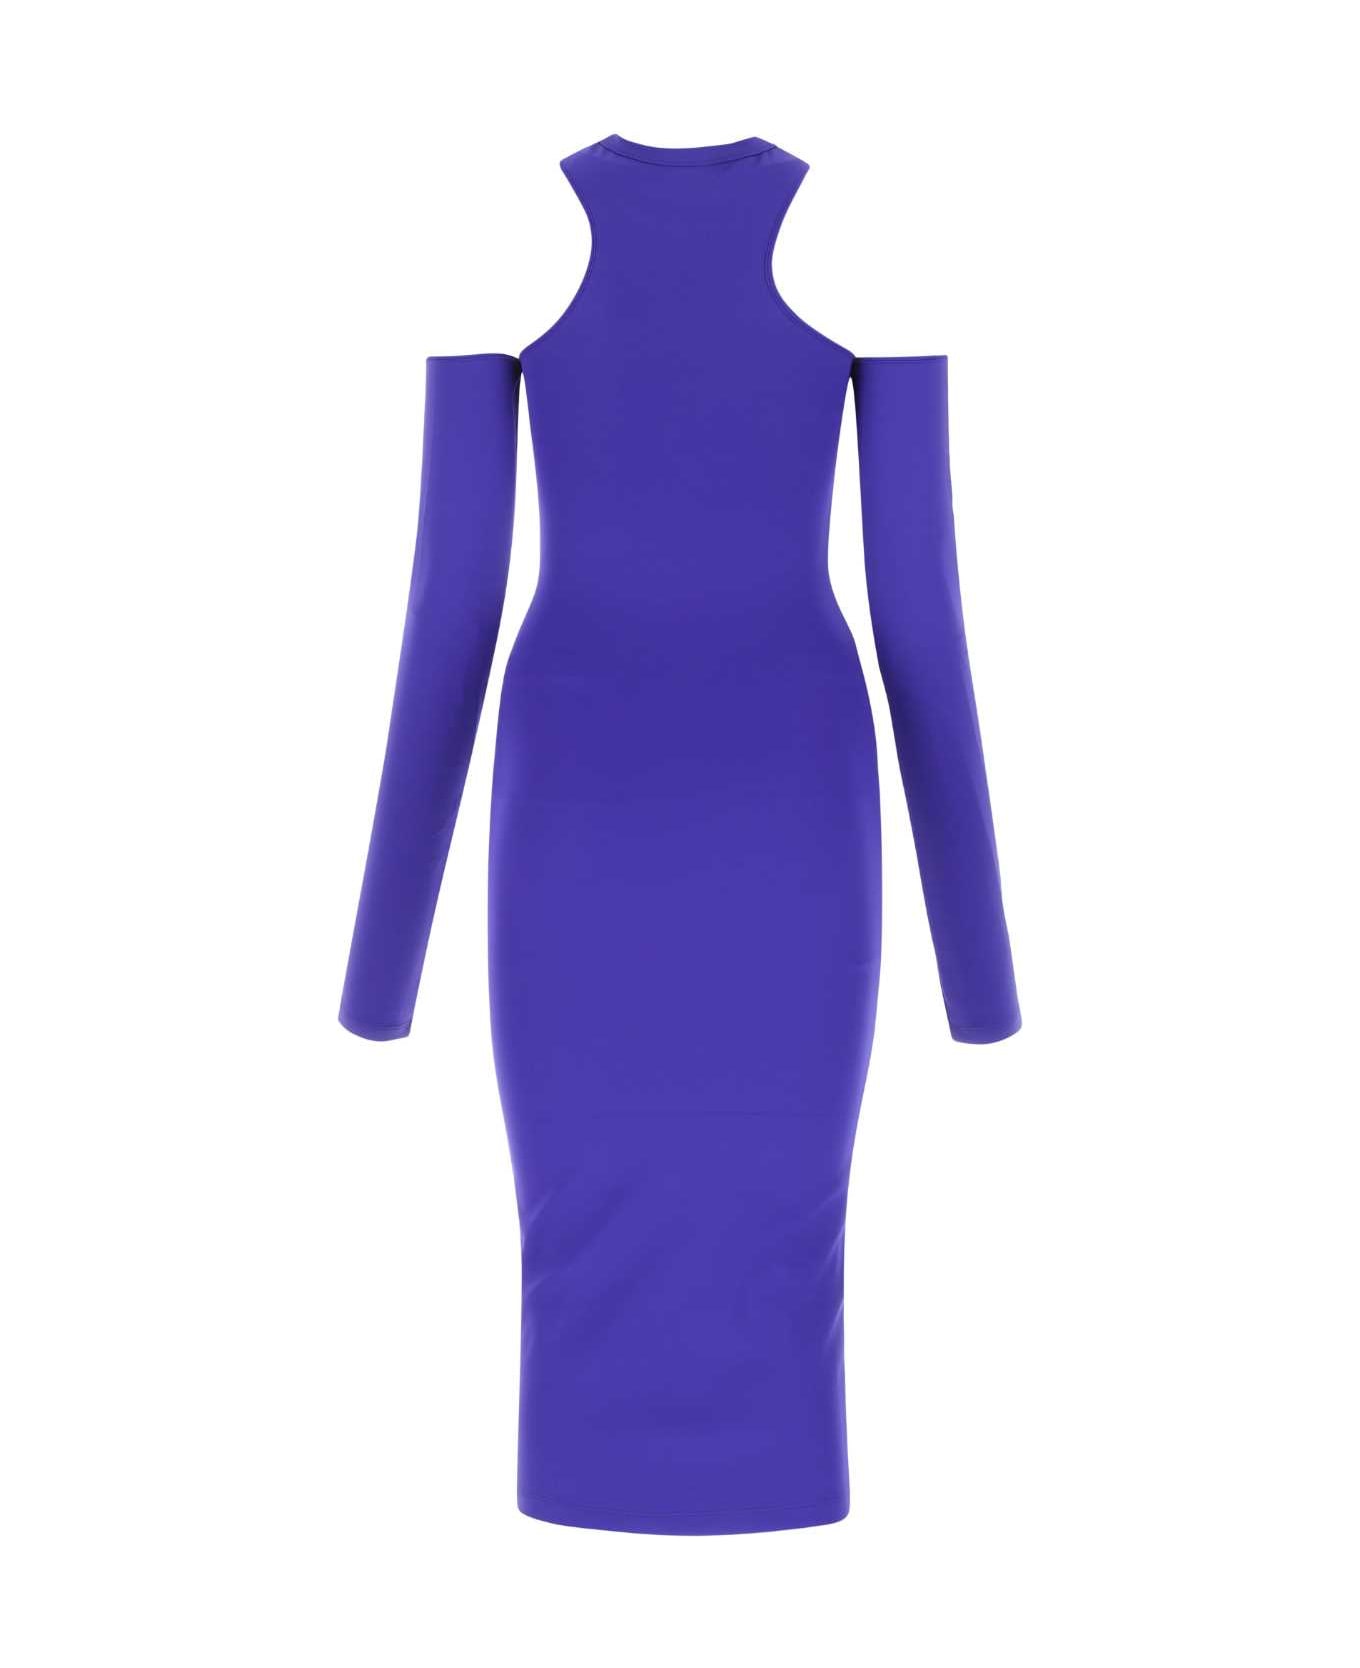 Off-White Purple Stretch Nylon Dress - 3737